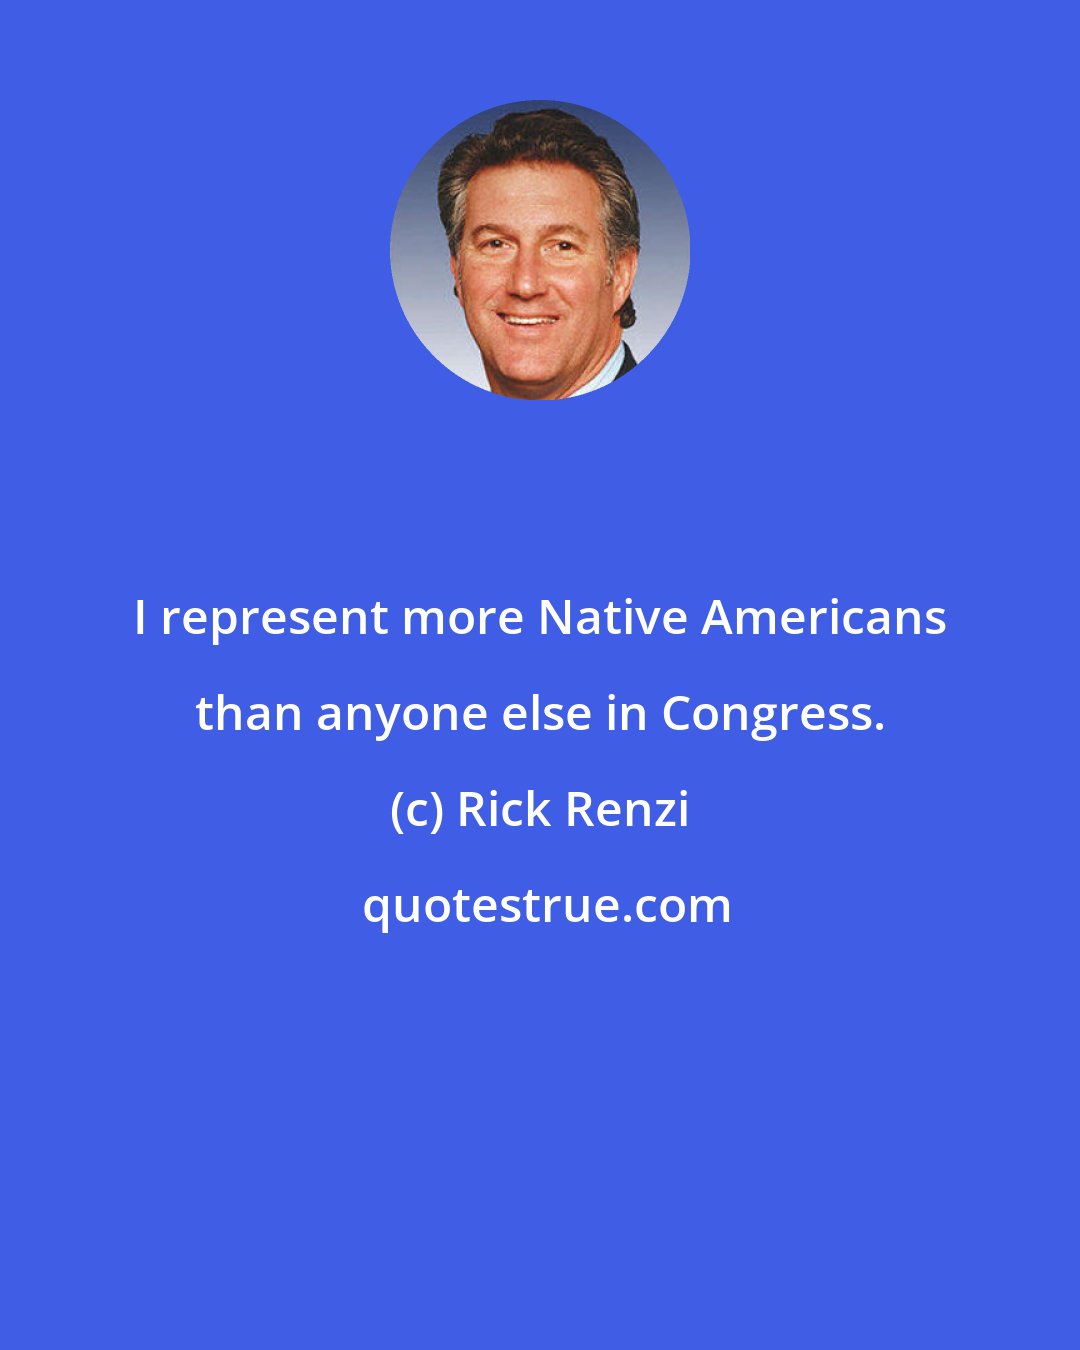 Rick Renzi: I represent more Native Americans than anyone else in Congress.